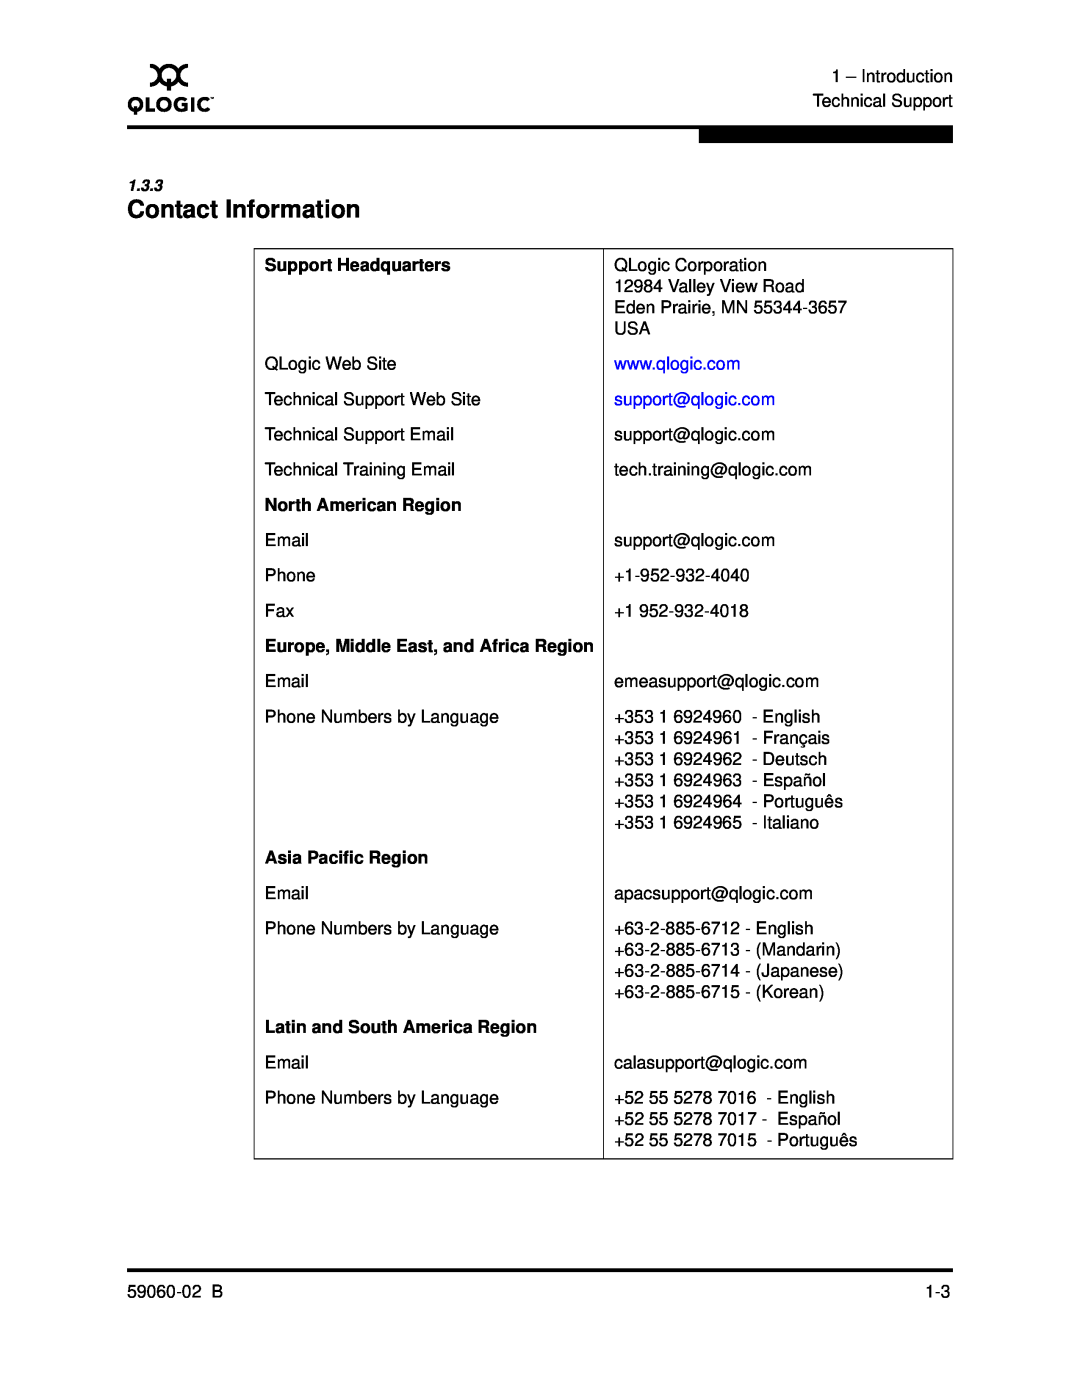 Q-Logic 59060-02 B manual Contact Information, Support Headquarters, North American Region, Asia Pacific Region 